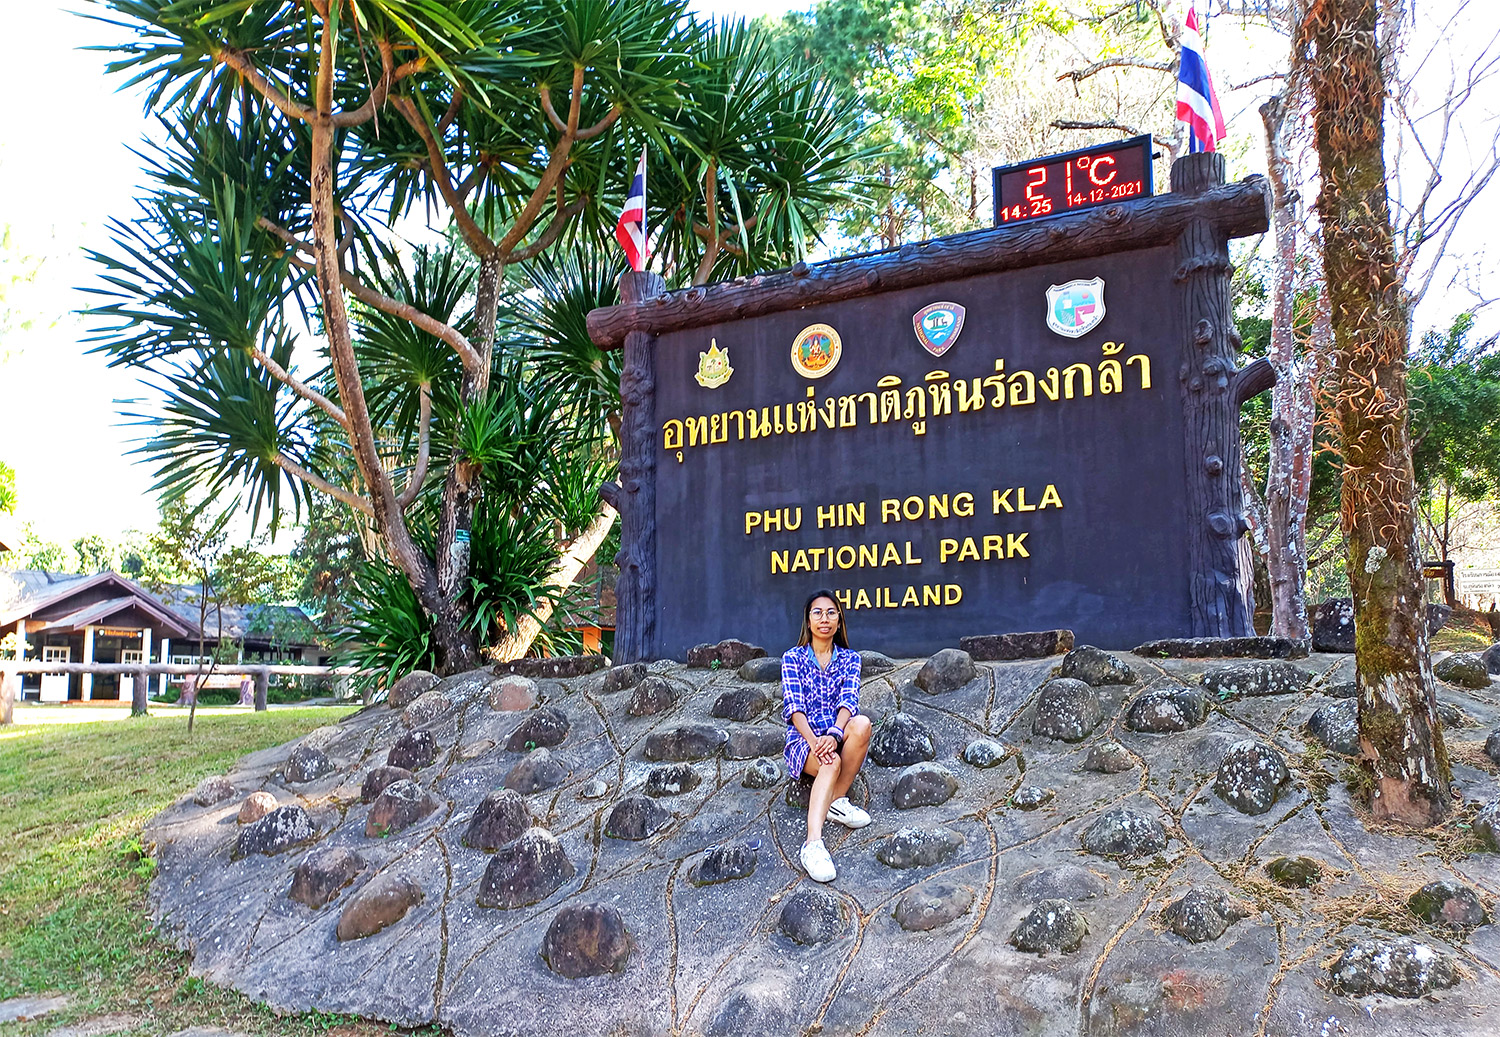 Parchi Nazionali della Thailandia: Phu Hin Rong Kla provincia di Phitsanulok